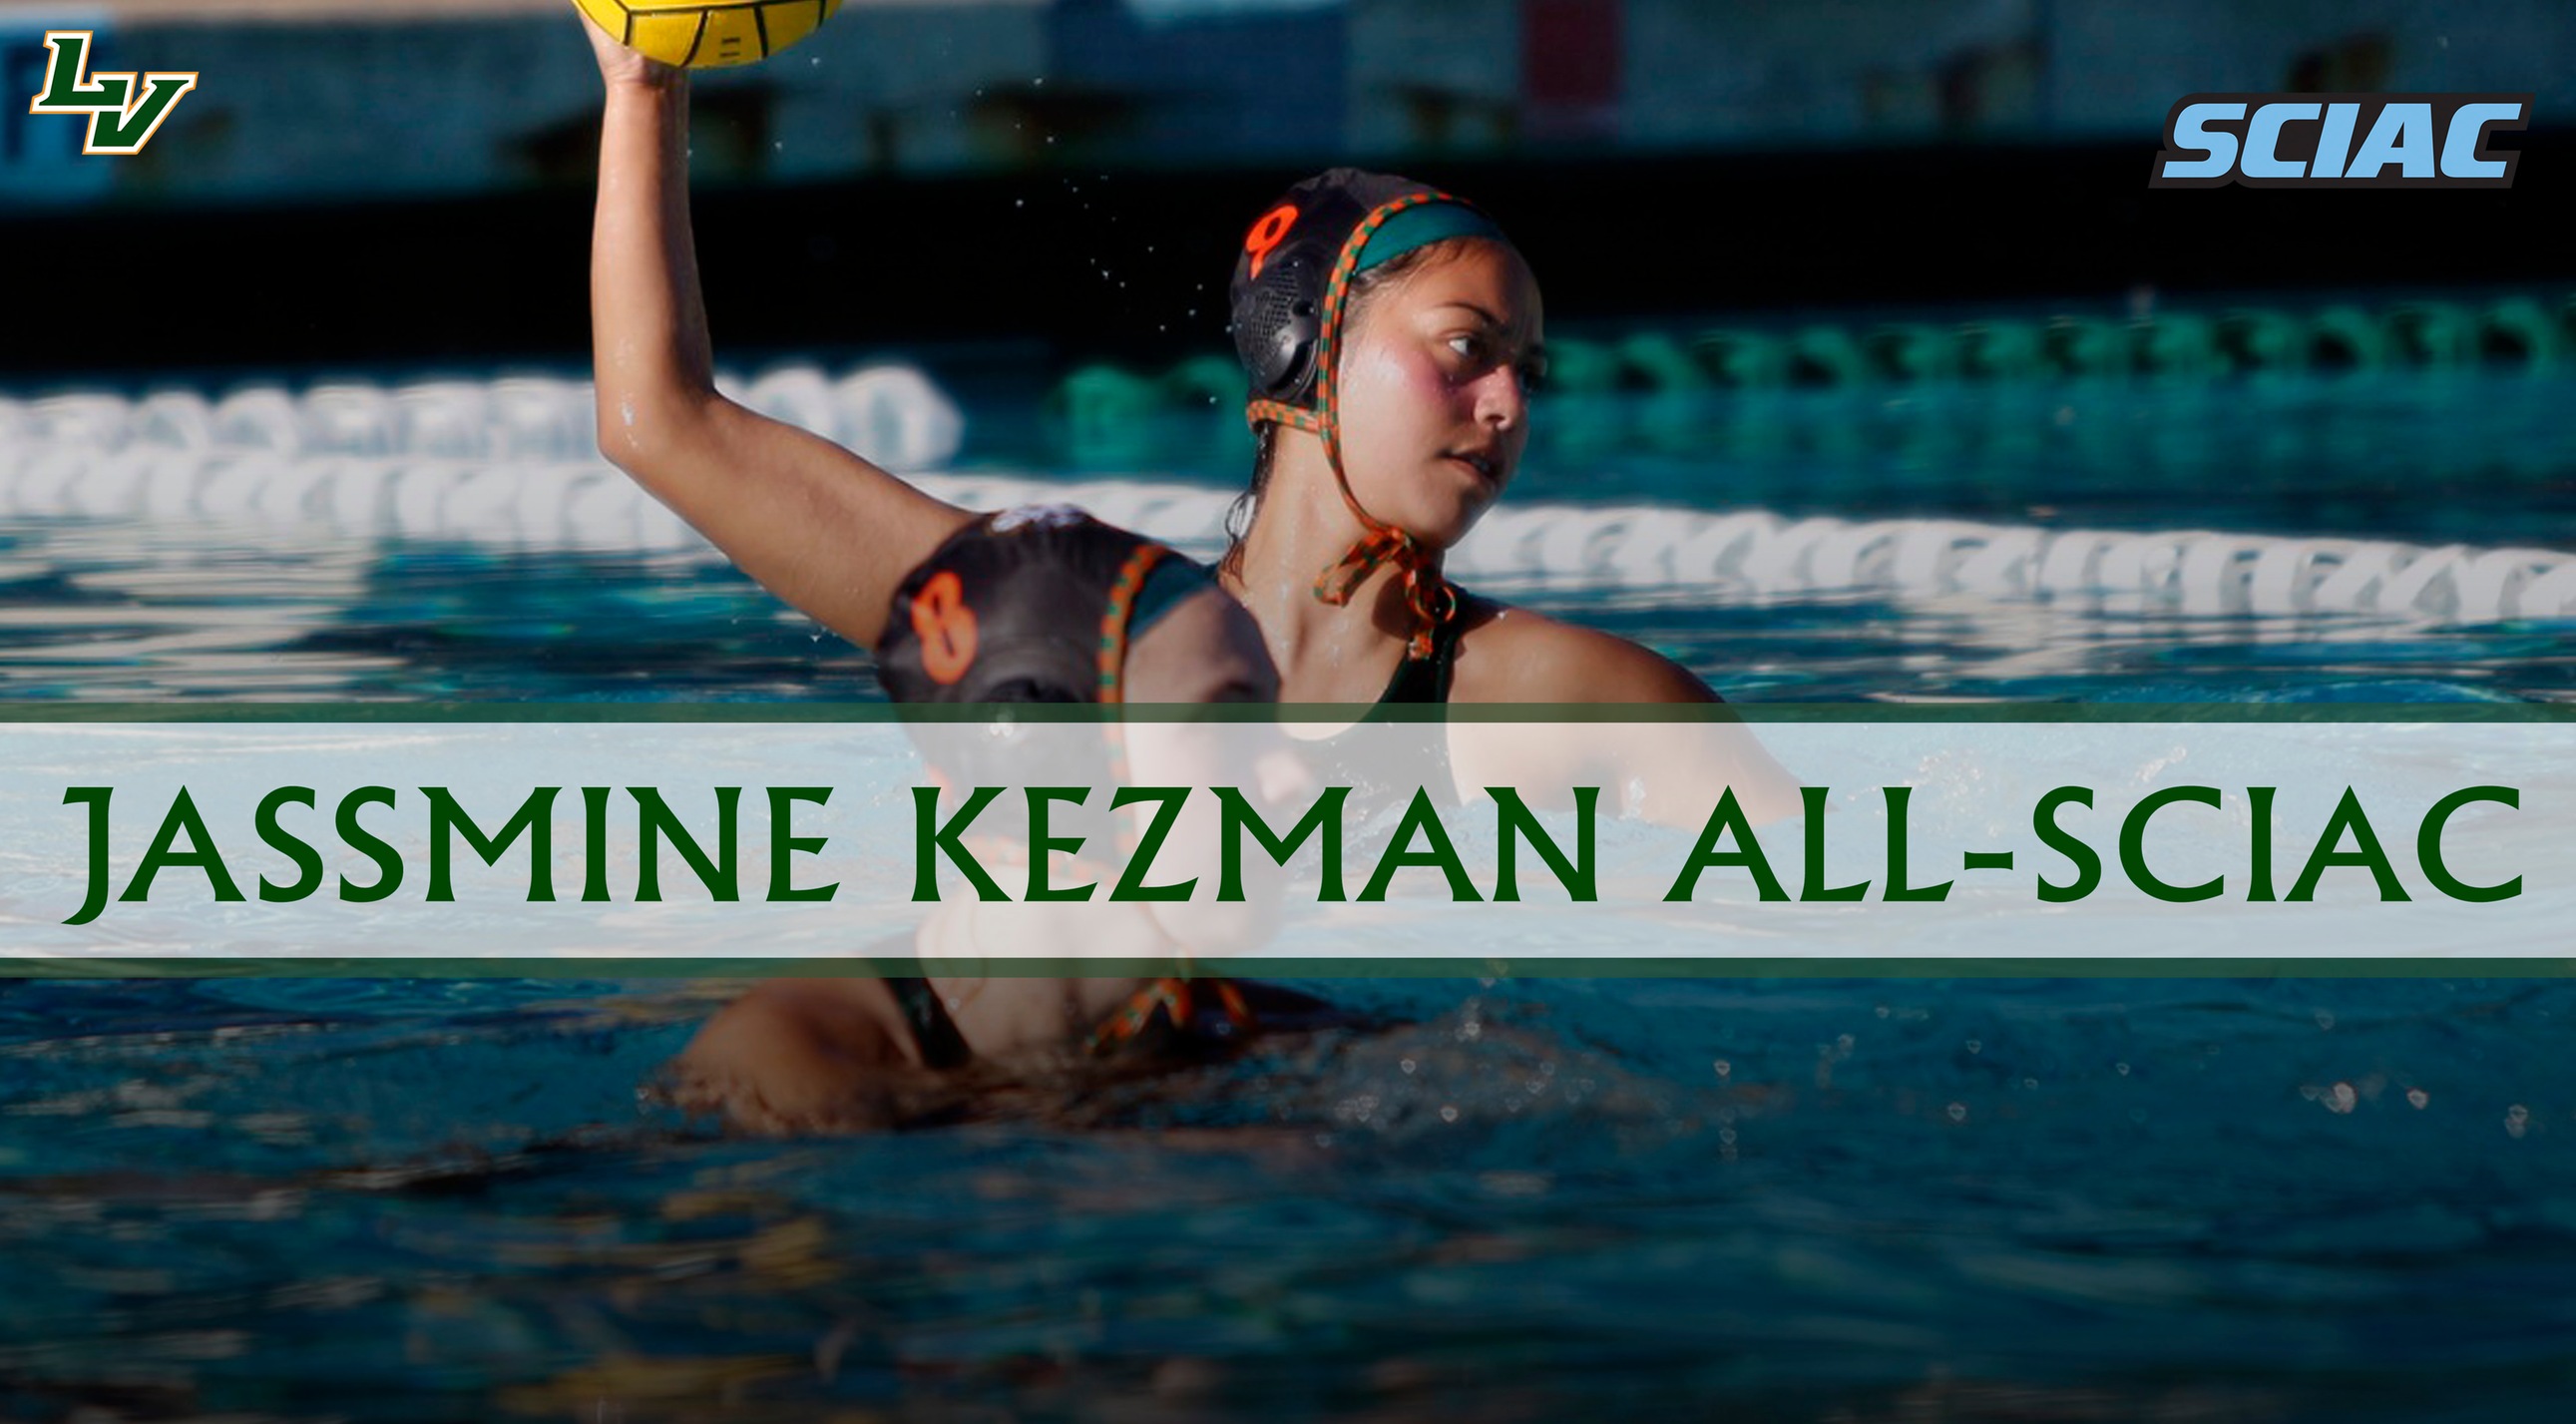 Jassmine Kezman earned her third All-SCIAC award.